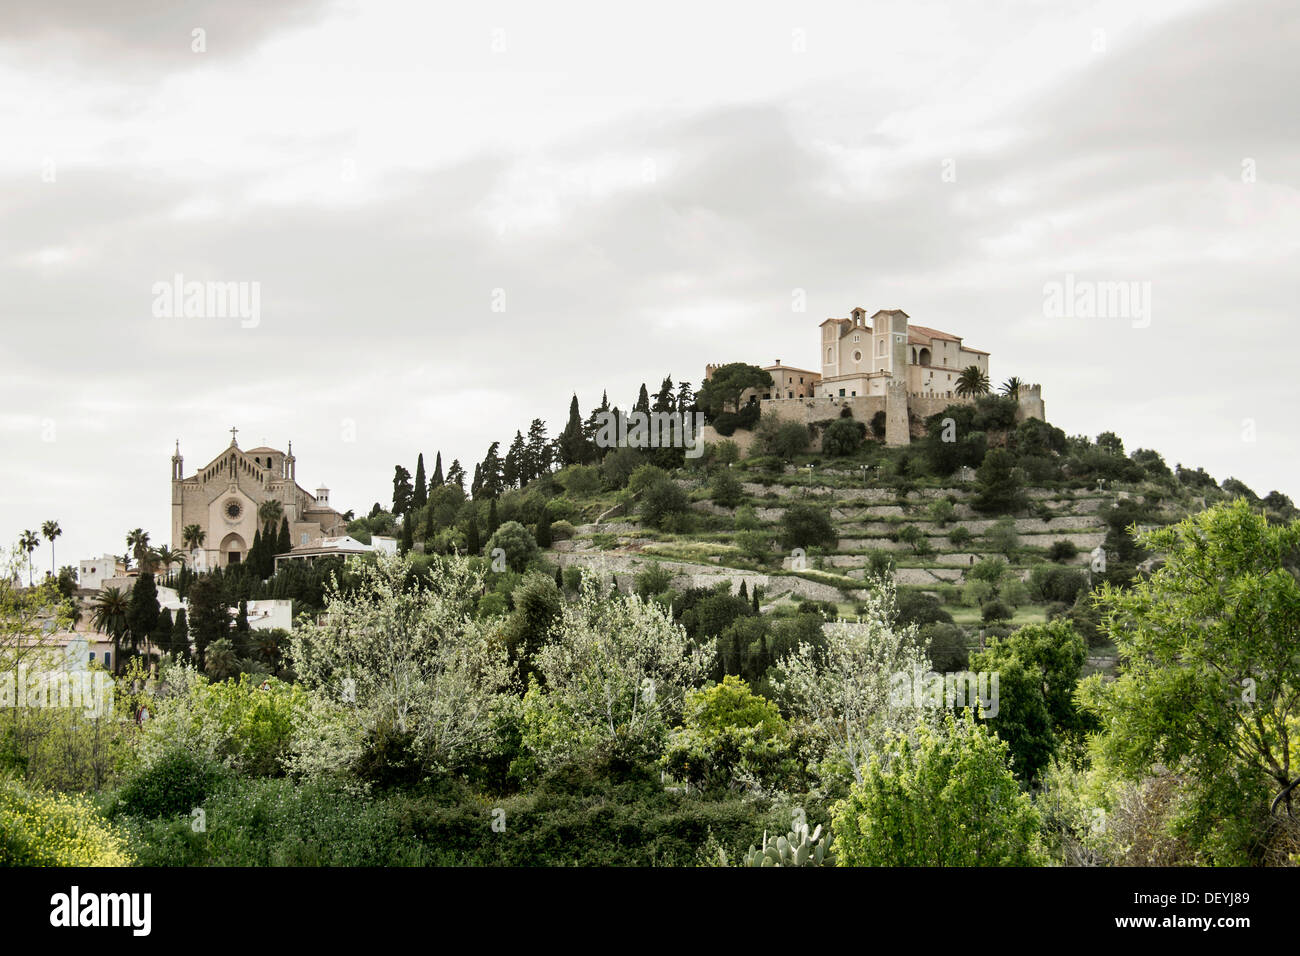 Hills with terraces and churches, Arta, Majorca, Balearic Islands, Spain Stock Photo